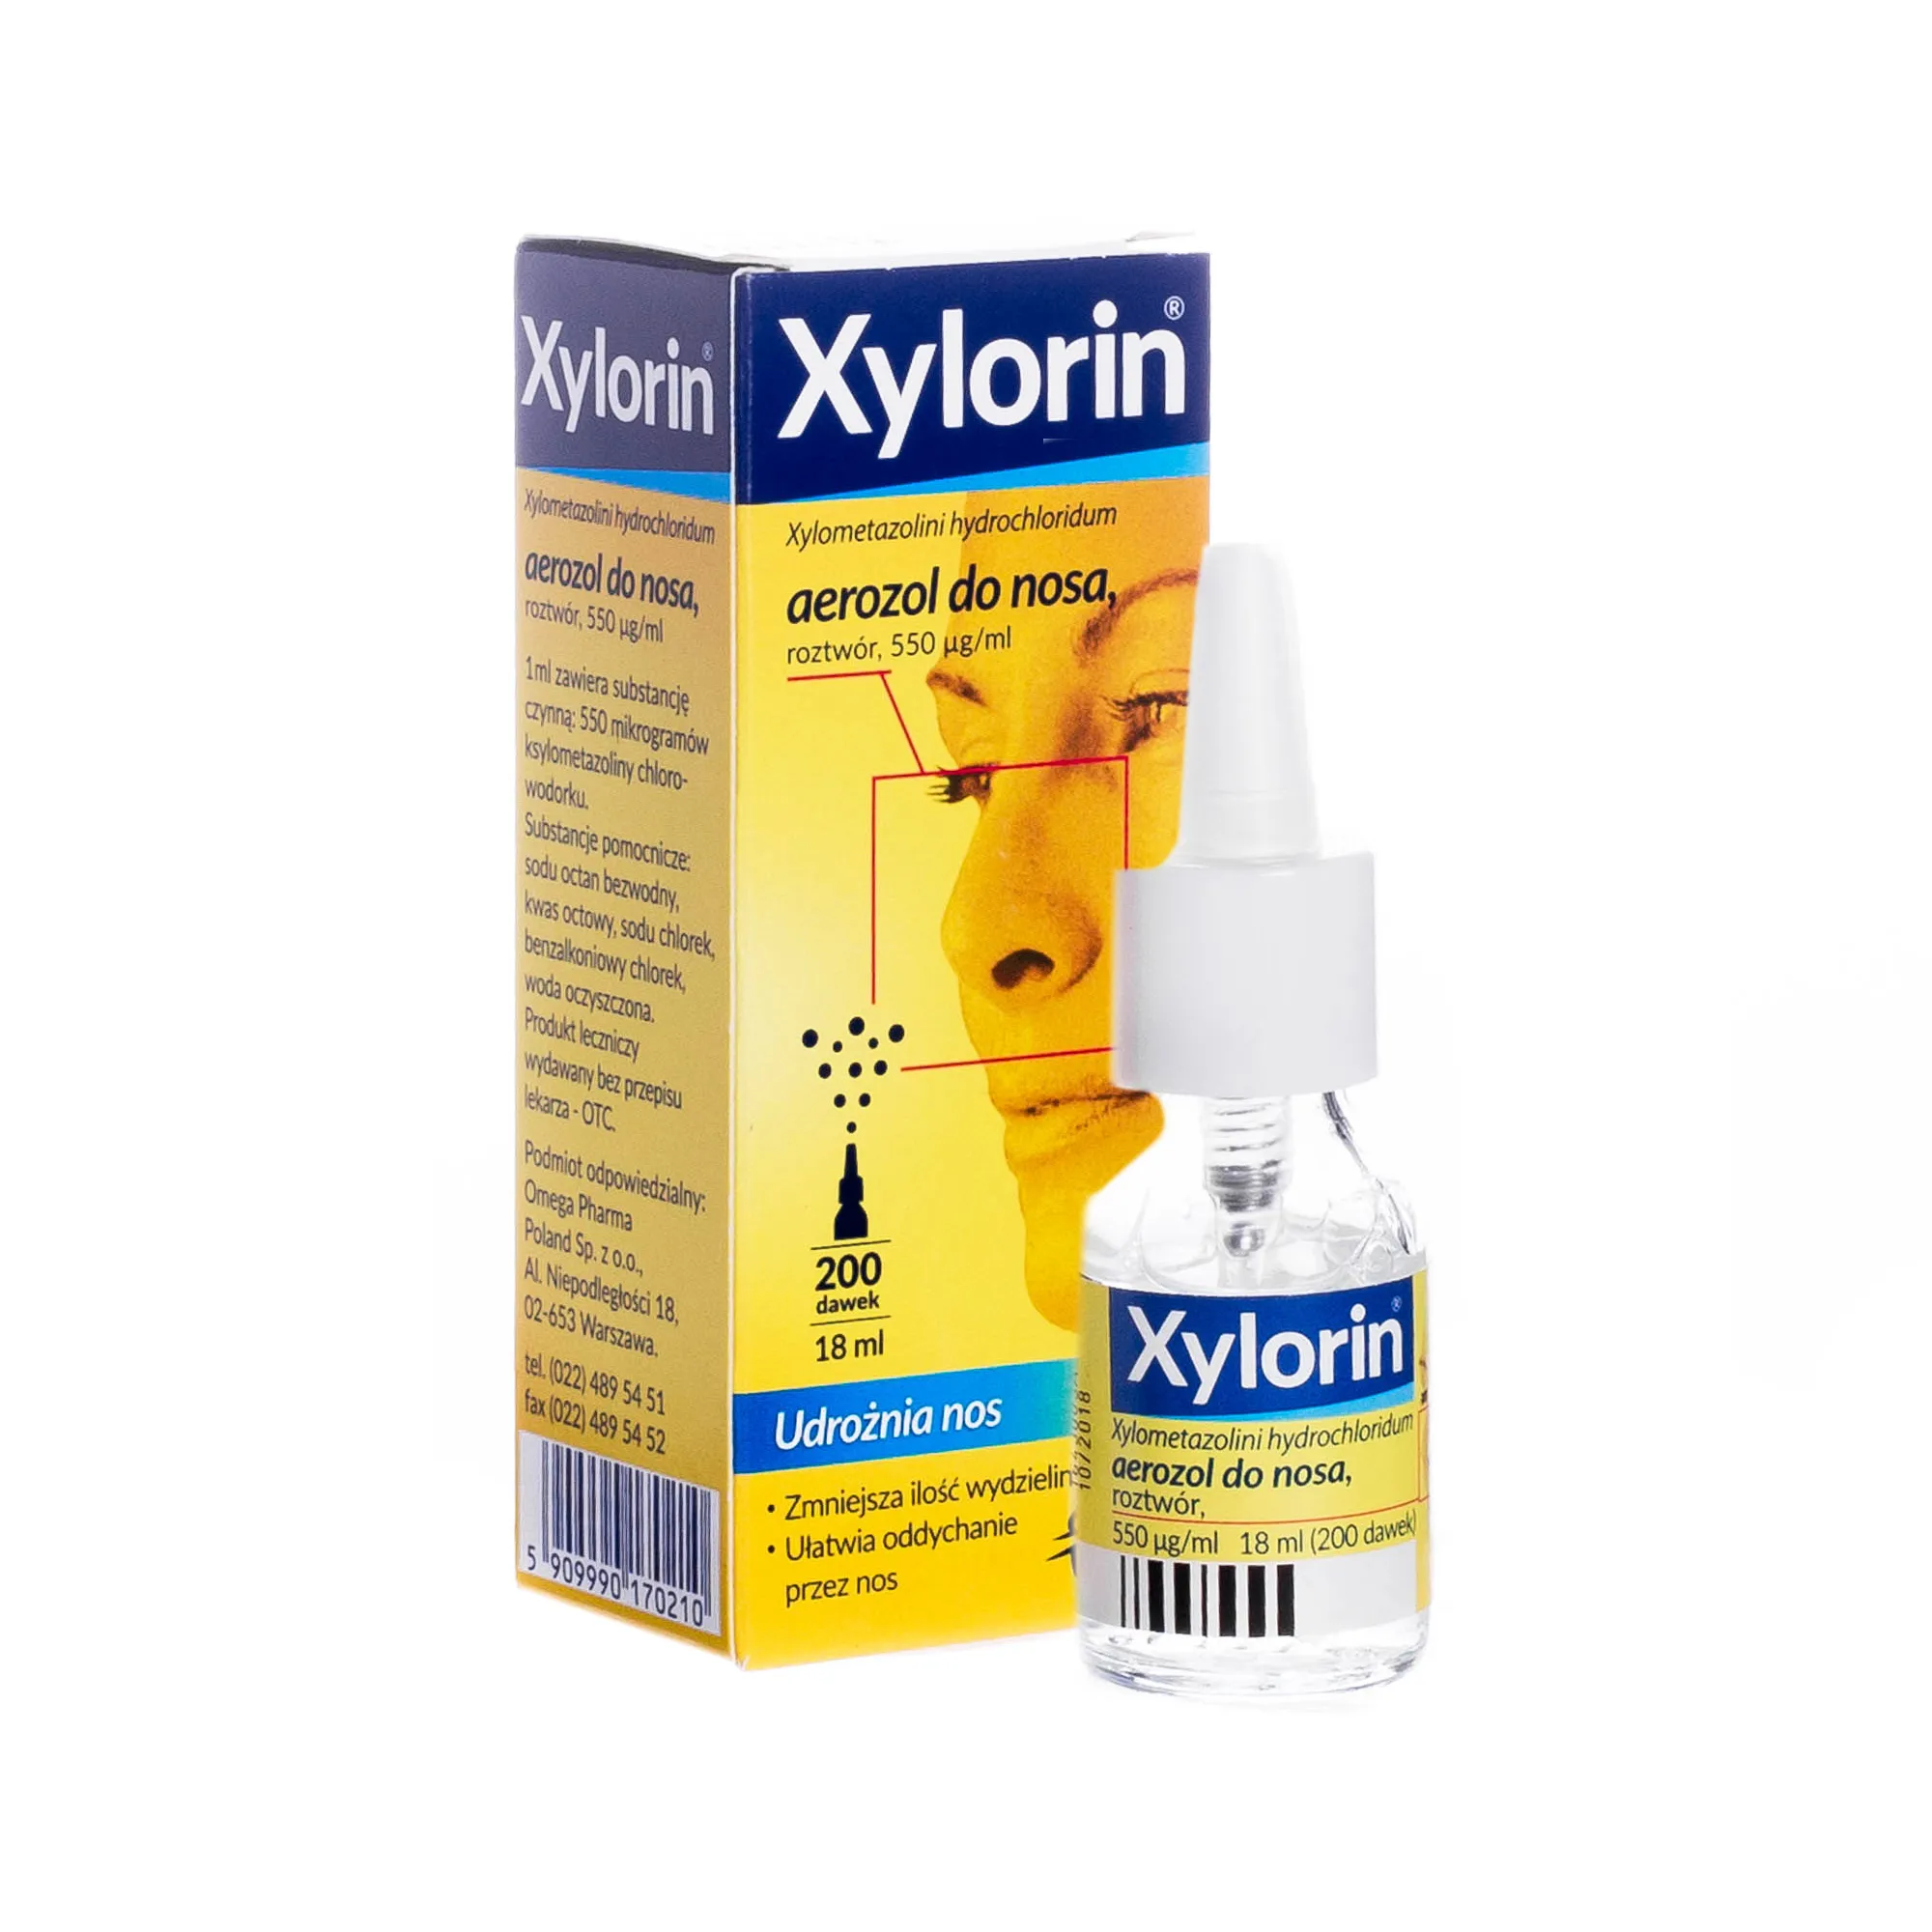 Xylorin - aerozol do nosa, 200 dawek, 18 ml 